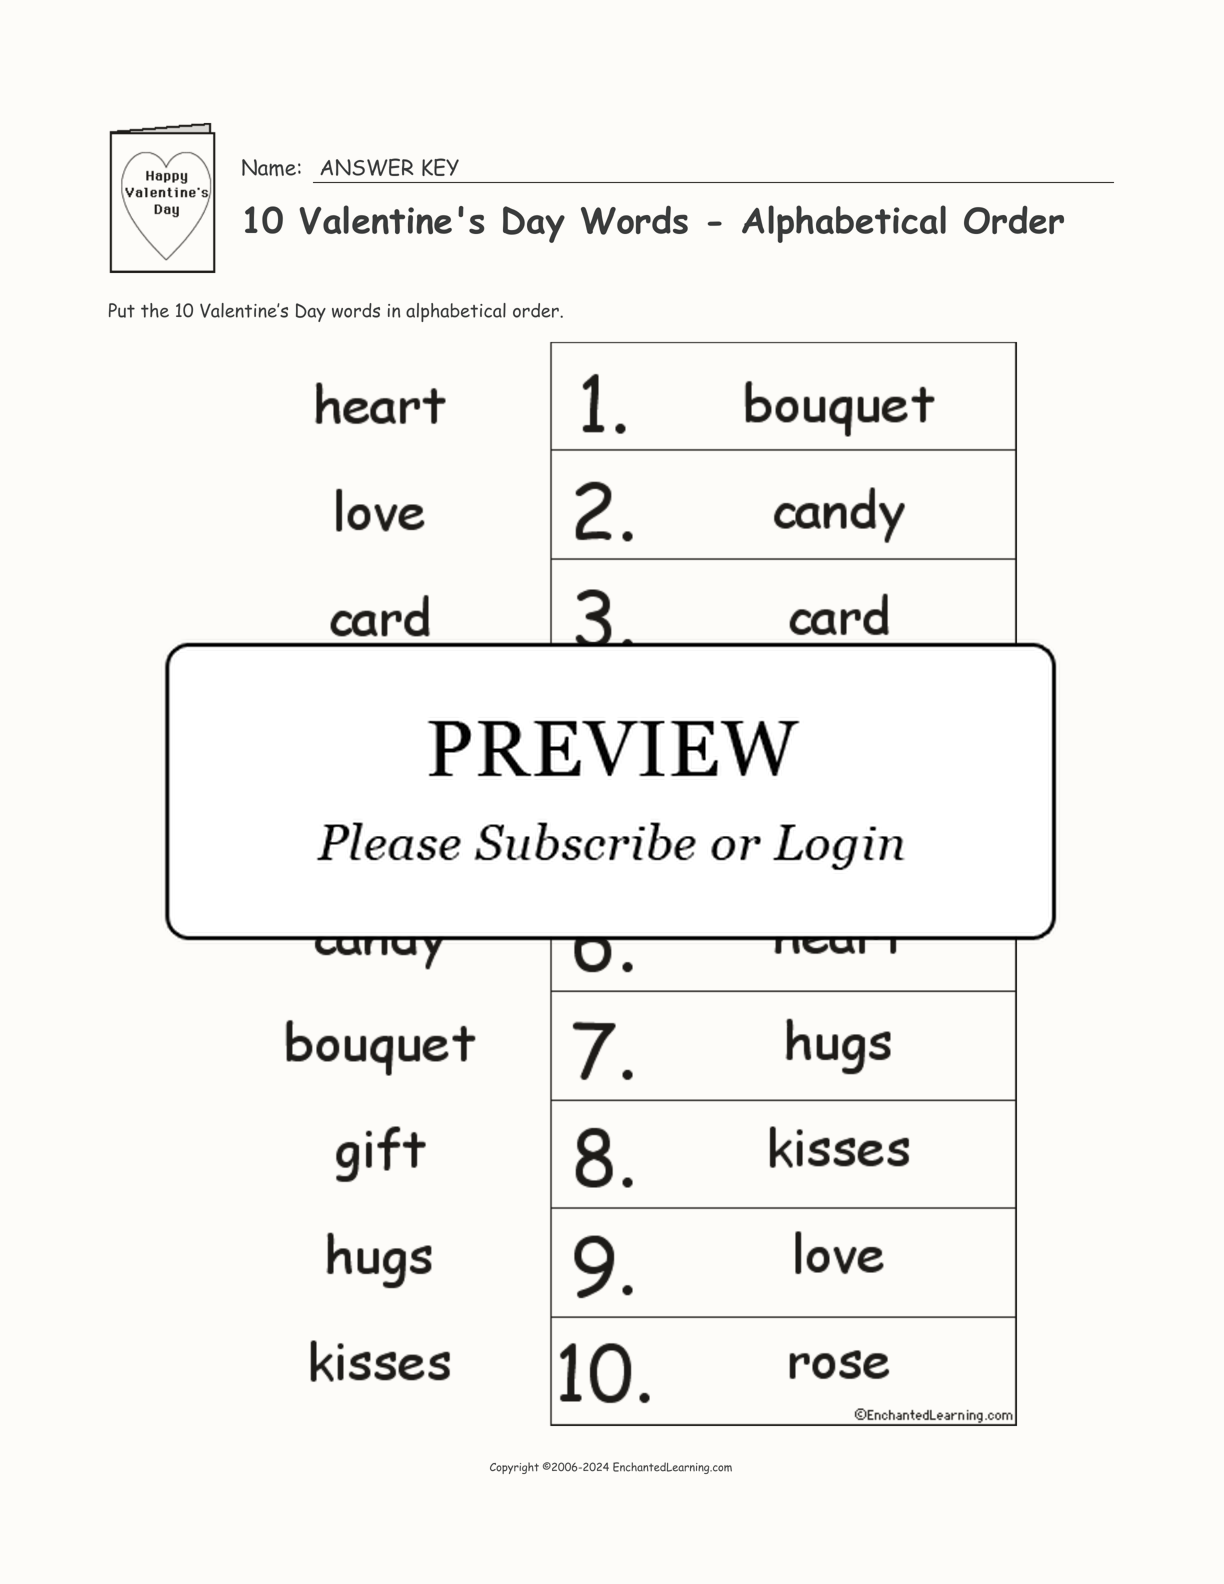 10 Valentine's Day Words - Alphabetical Order interactive worksheet page 2